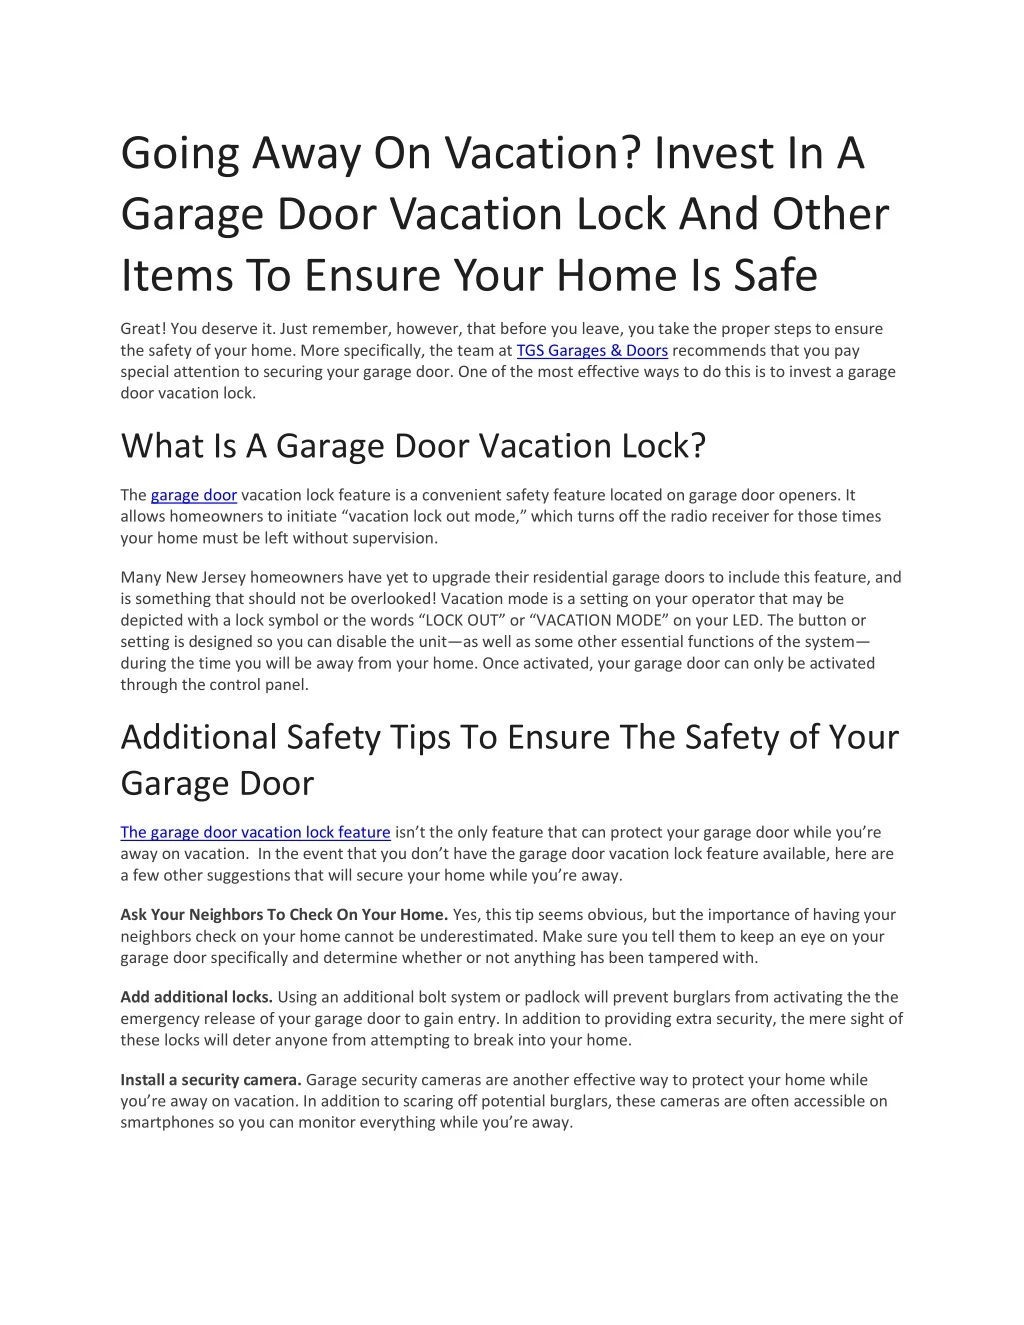 going away on vacation invest in a garage door